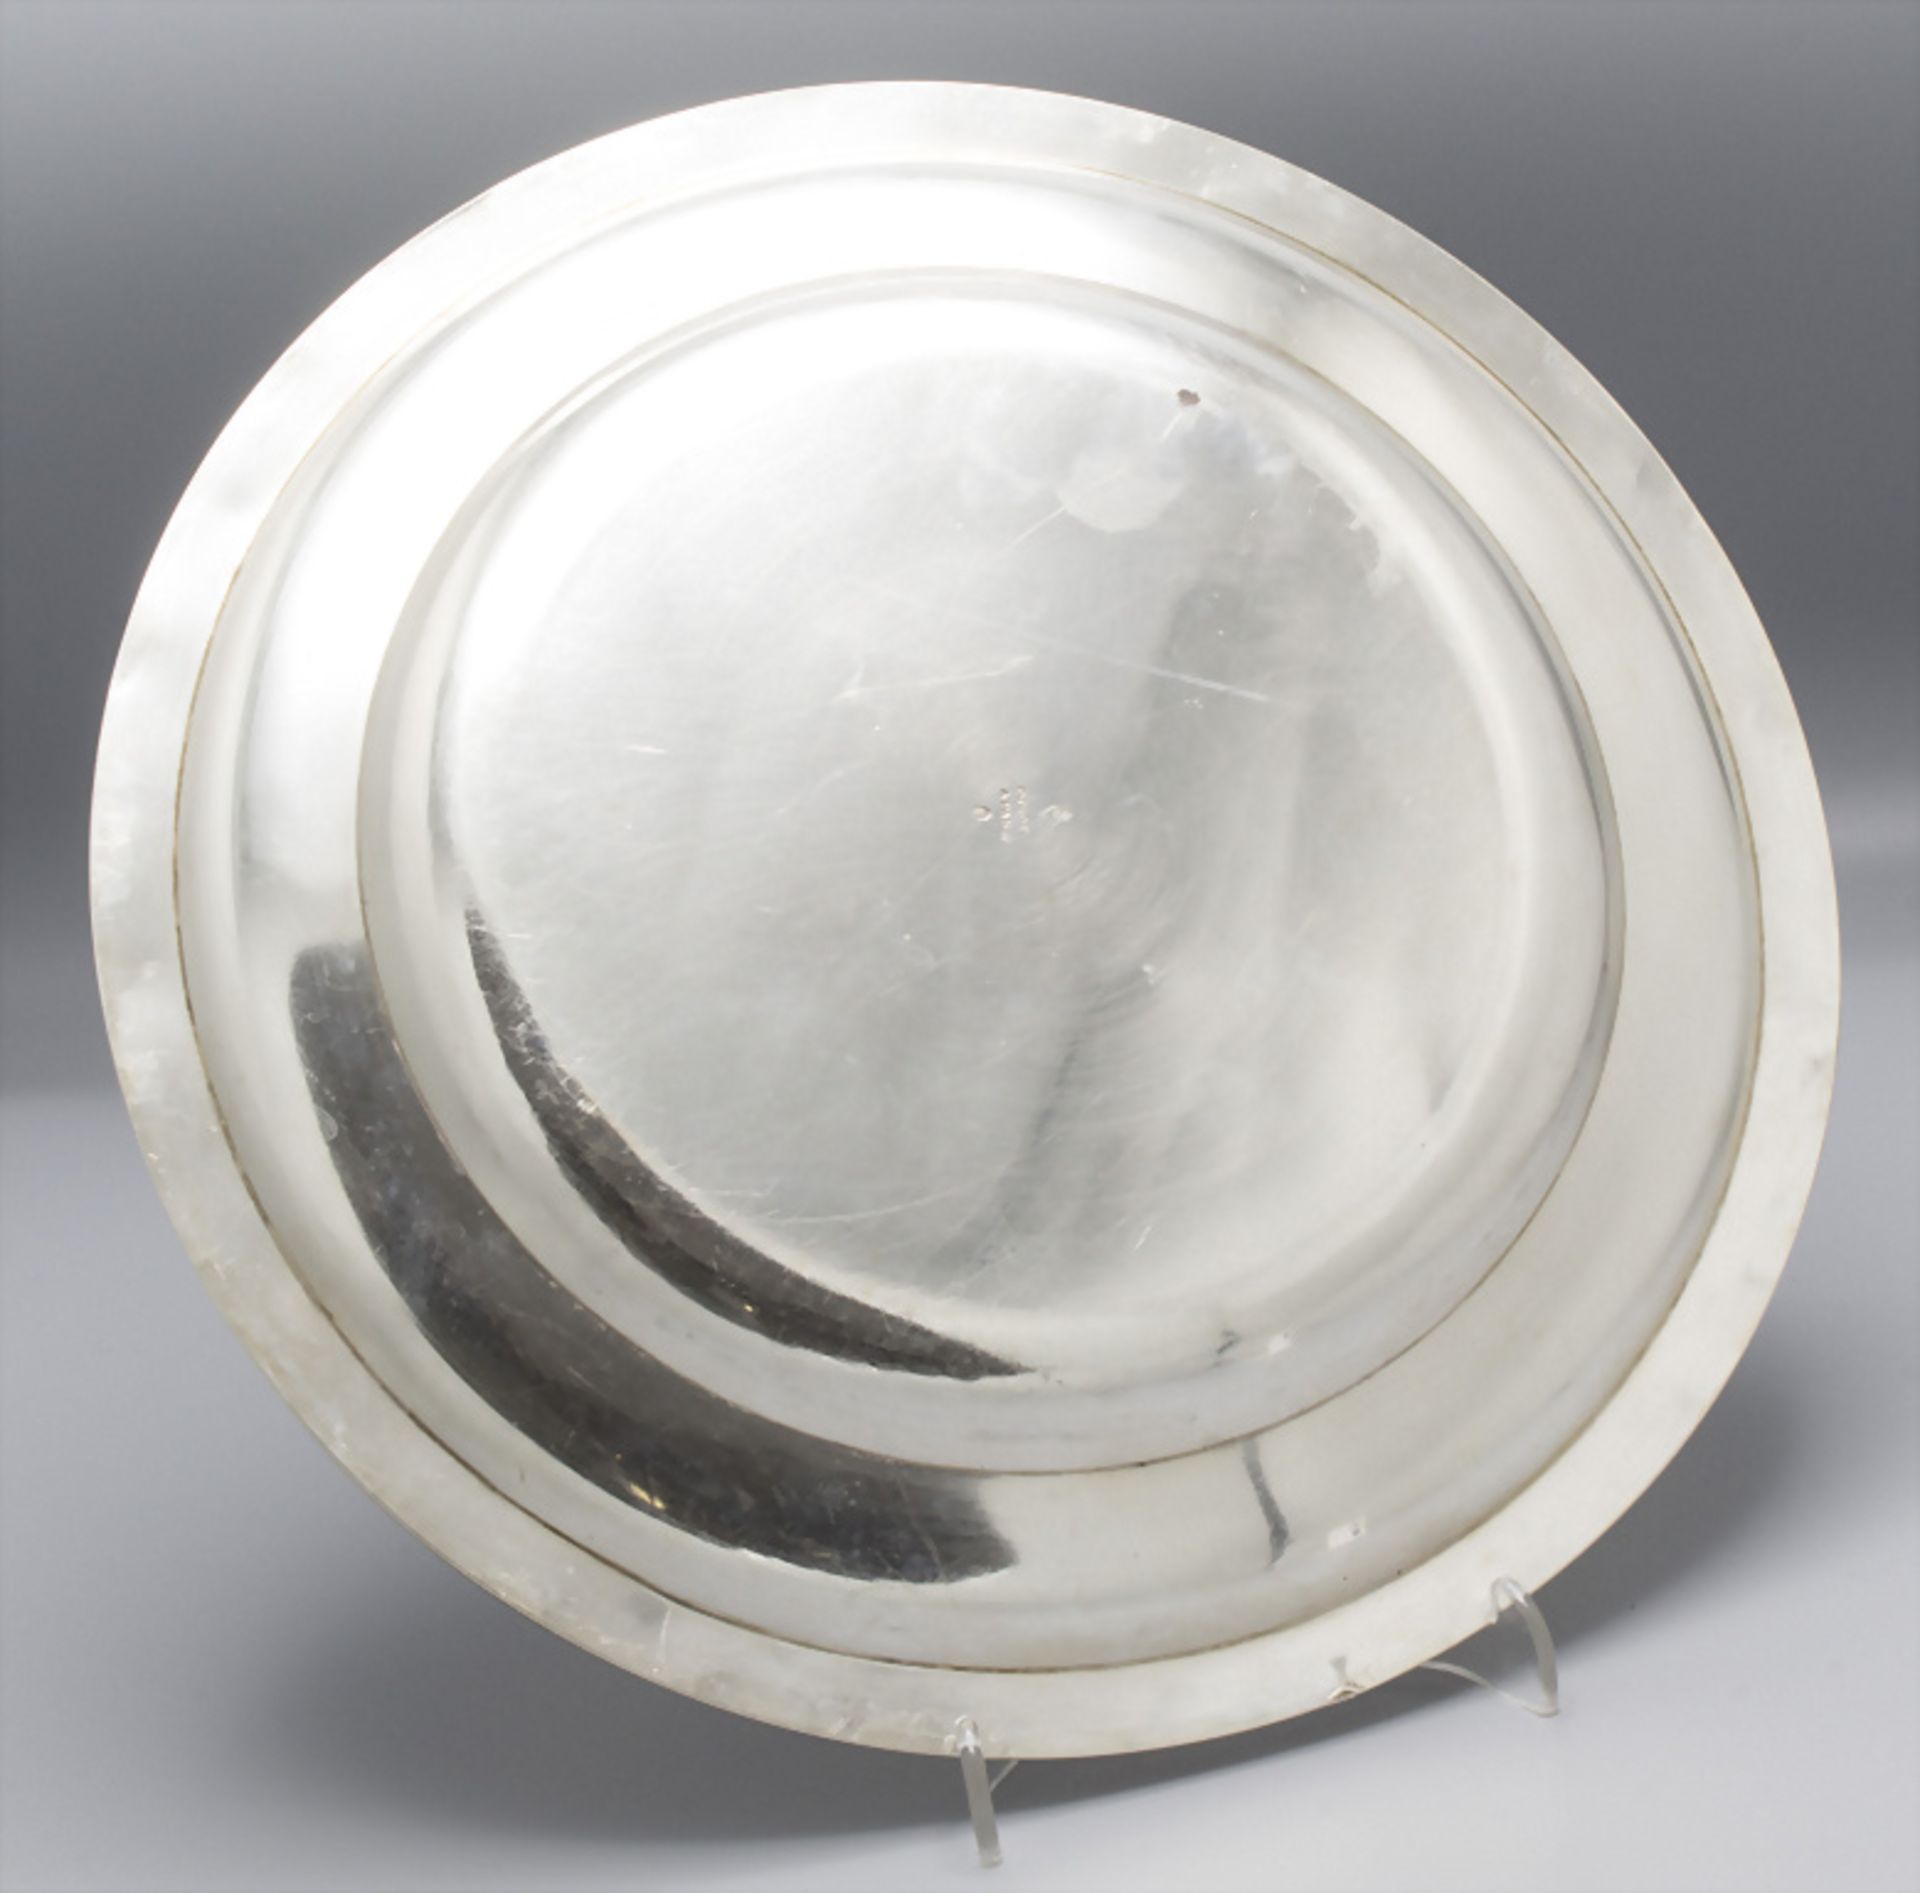 12 Silberteller / 12 assiettes en argent massif / A set of 12 silver plates, Odiot, Paris, um 1870 - Image 25 of 29